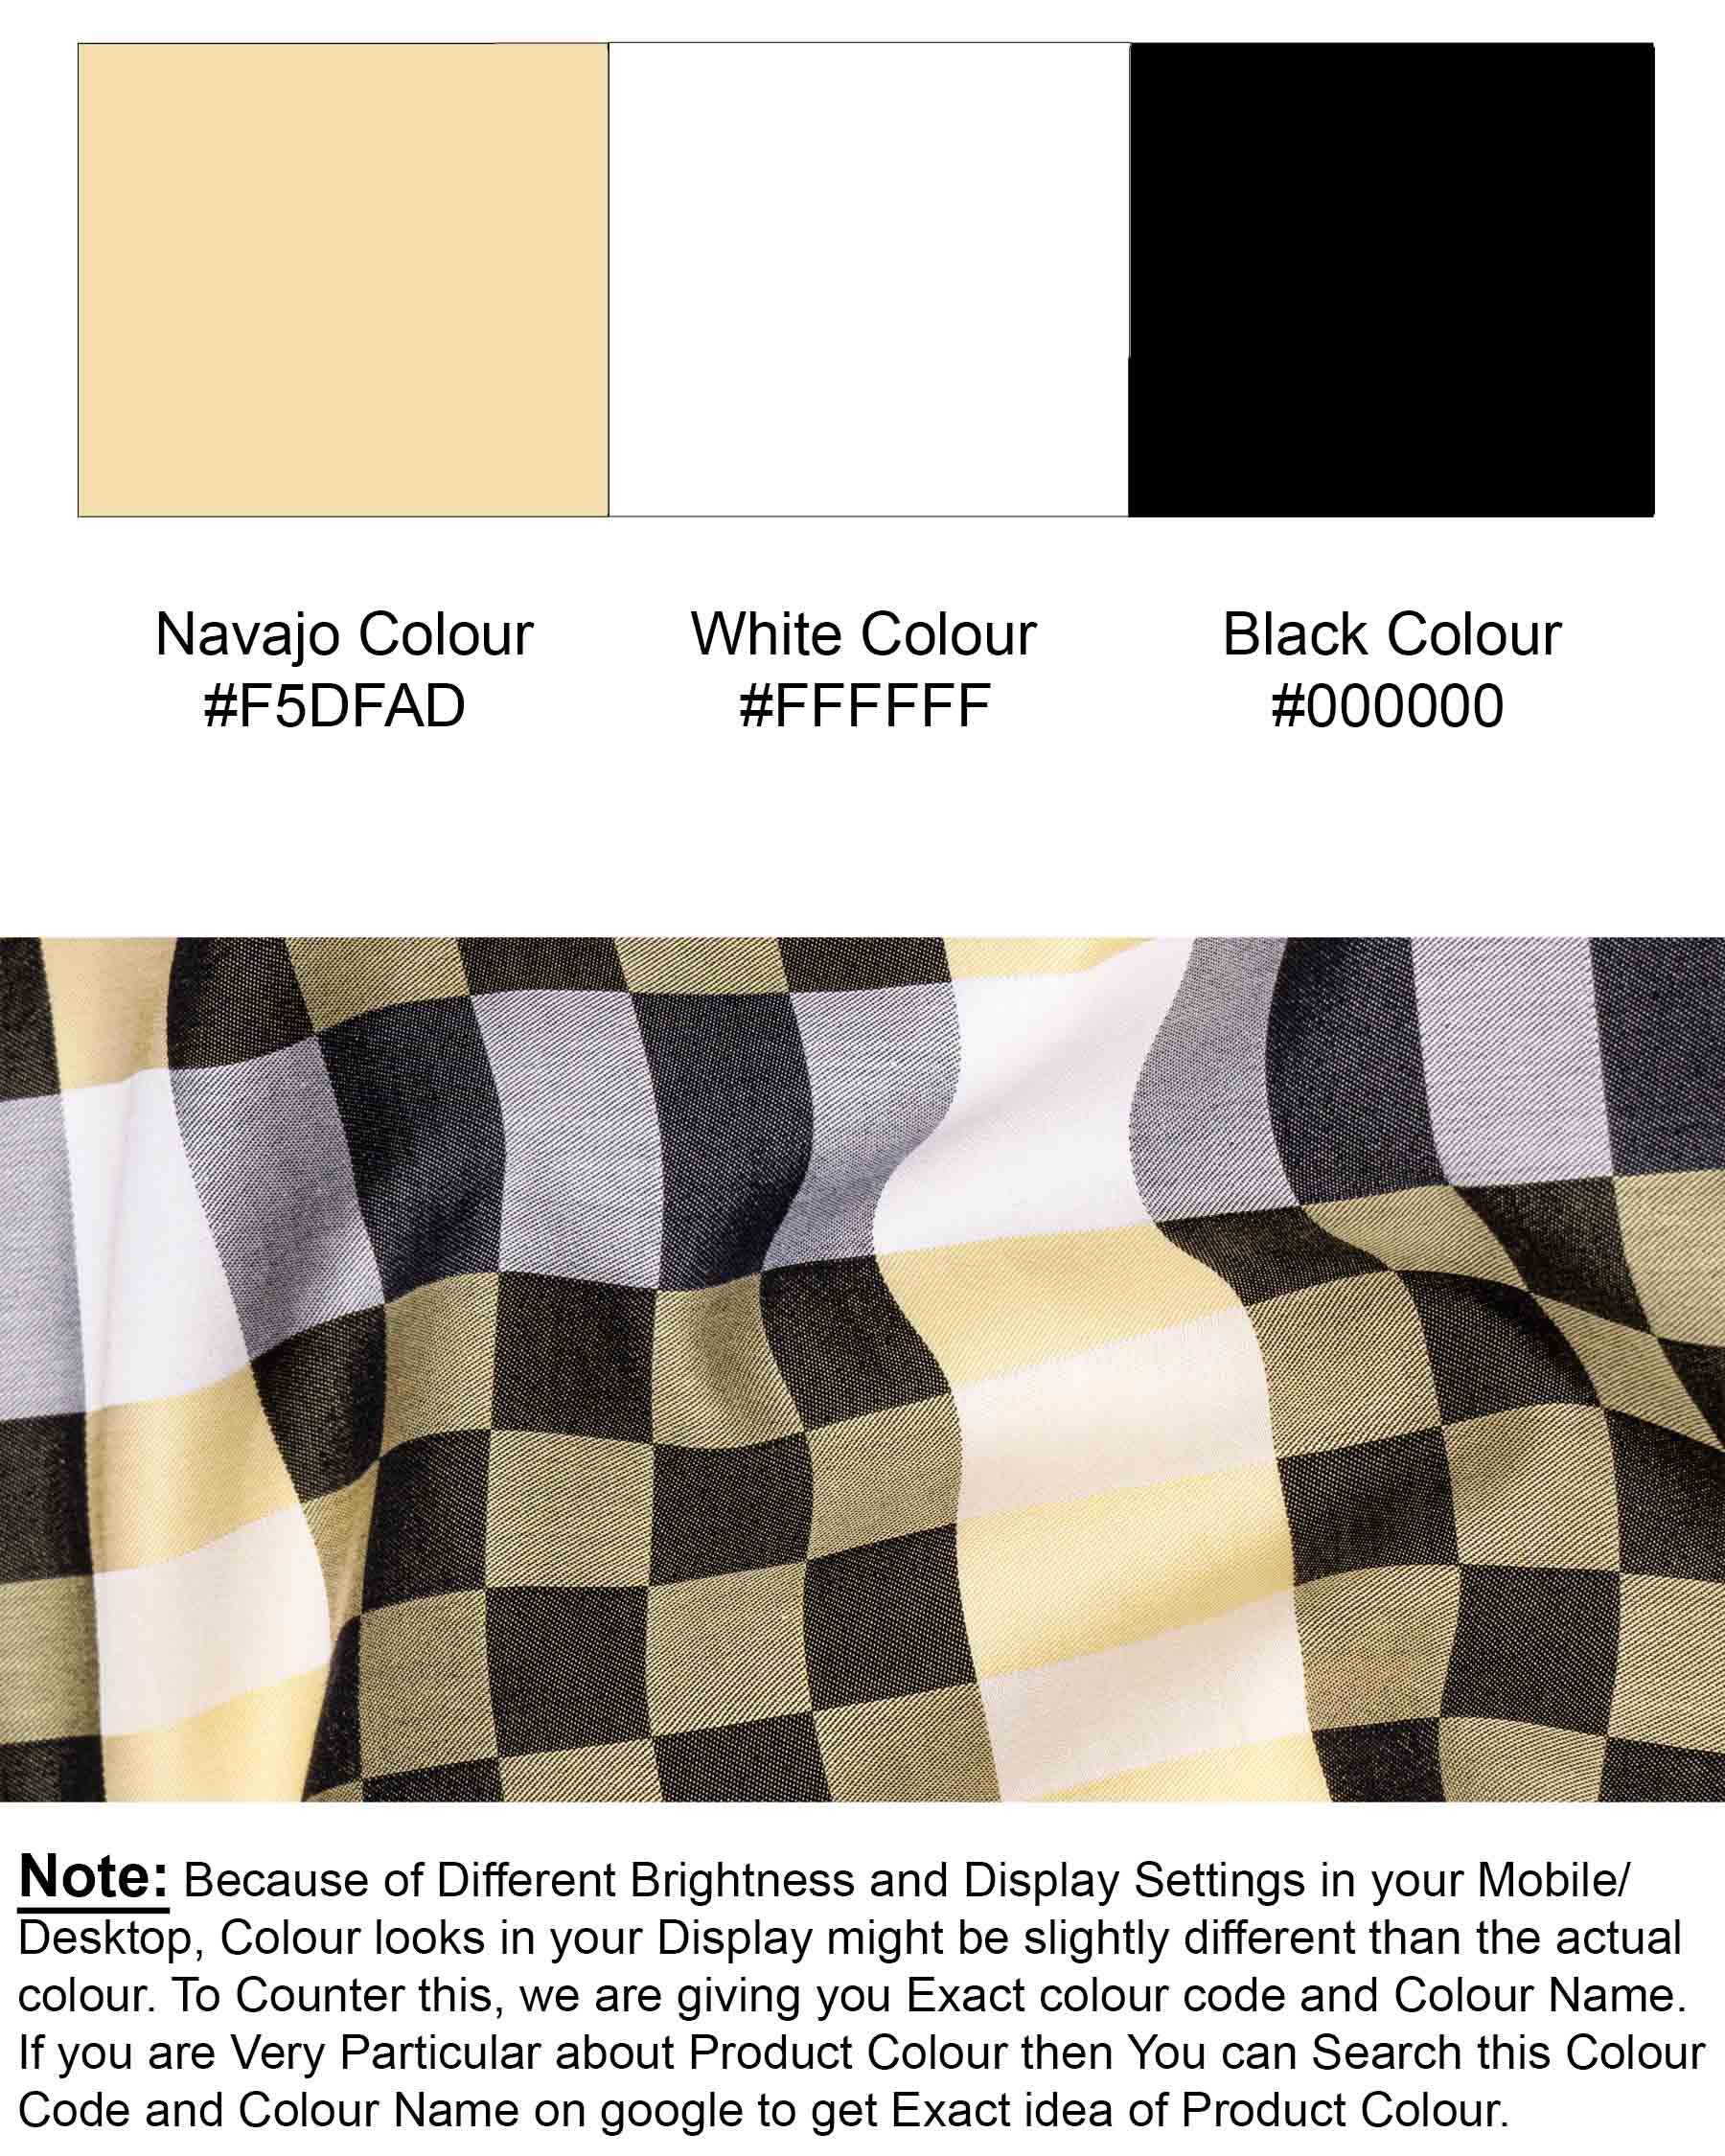 Navajo with Bright White and Jade Black Super Soft Premium Cotton Shirt  6473-BLK-38, 6473-BLK-H-38, 6473-BLK-39, 6473-BLK-H-39, 6473-BLK-40, 6473-BLK-H-40, 6473-BLK-42, 6473-BLK-H-42, 6473-BLK-44, 6473-BLK-H-44, 6473-BLK-46, 6473-BLK-H-46, 6473-BLK-48, 6473-BLK-H-48, 6473-BLK-50, 6473-BLK-H-50, 6473-BLK-52, 6473-BLK-H-52